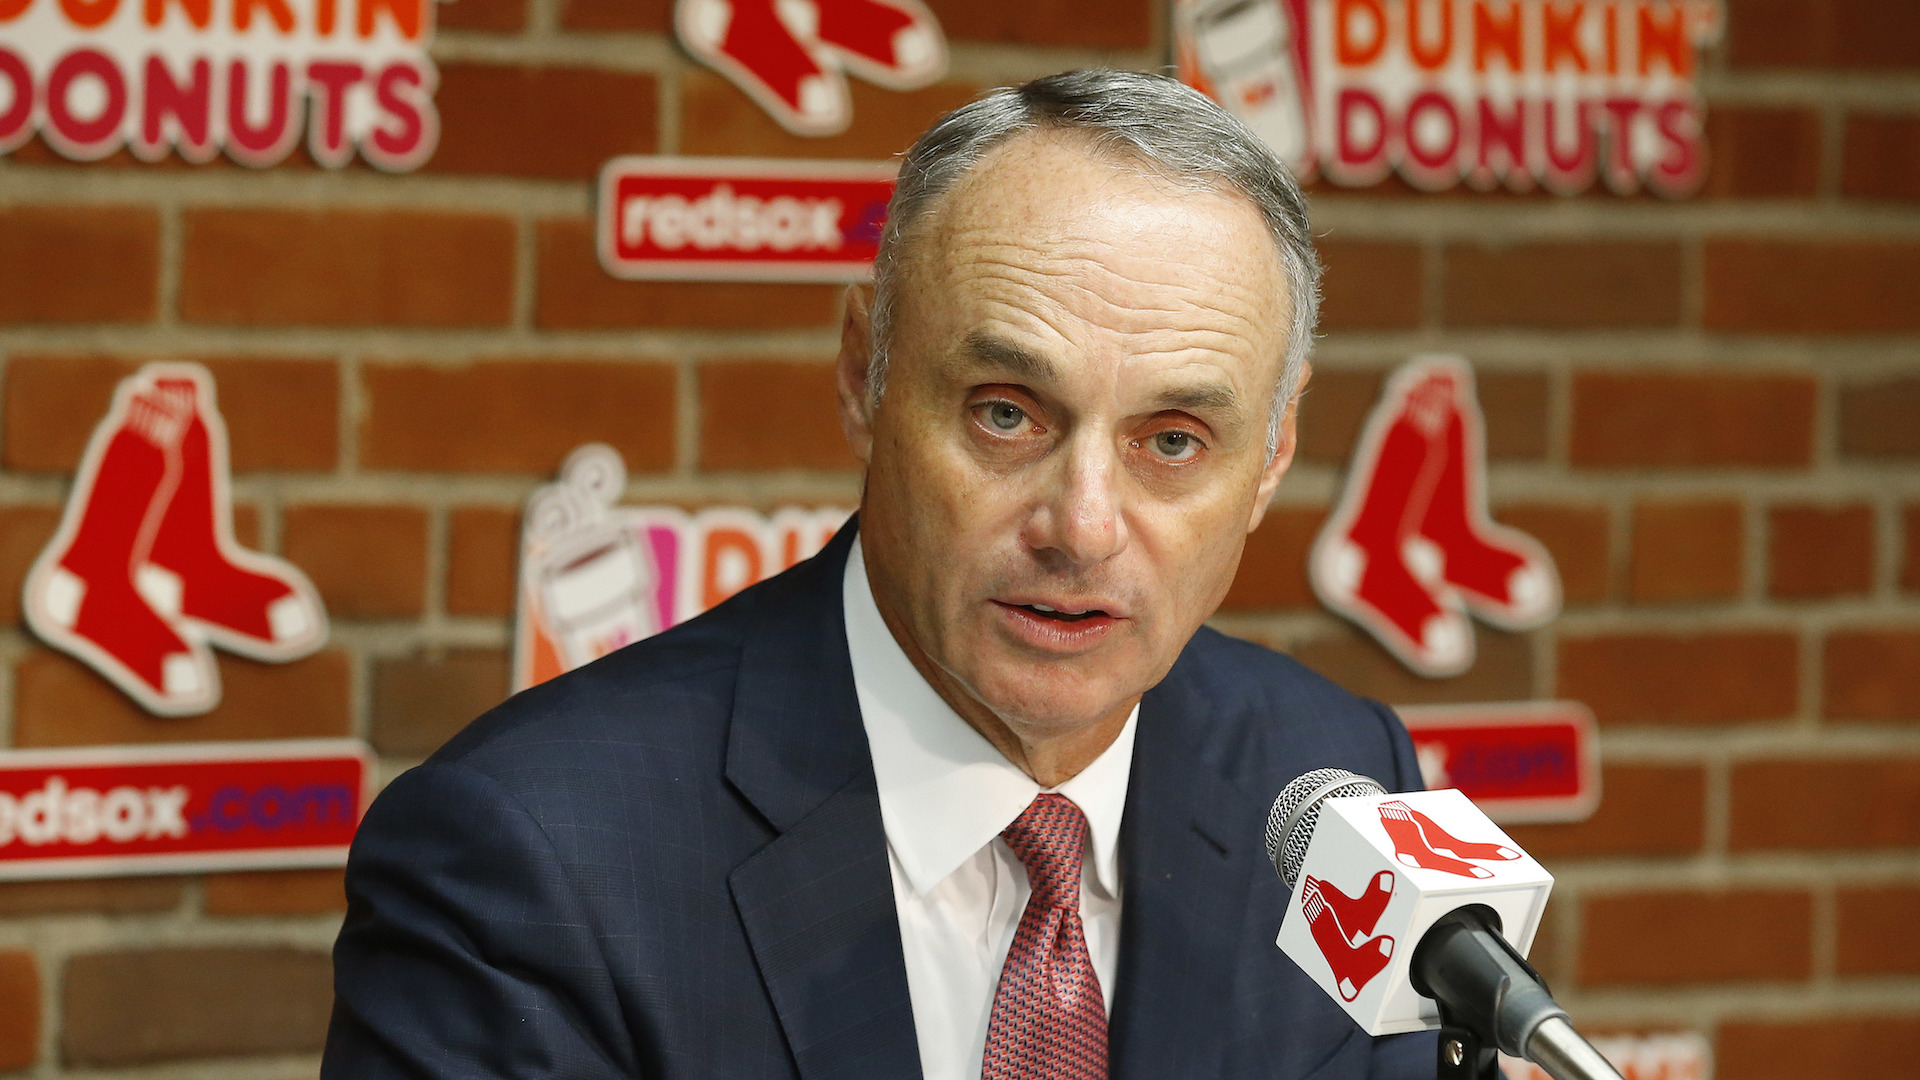 MLB rumors: Red Sox's J.D. Martinez denies cheating as MLB investigates 